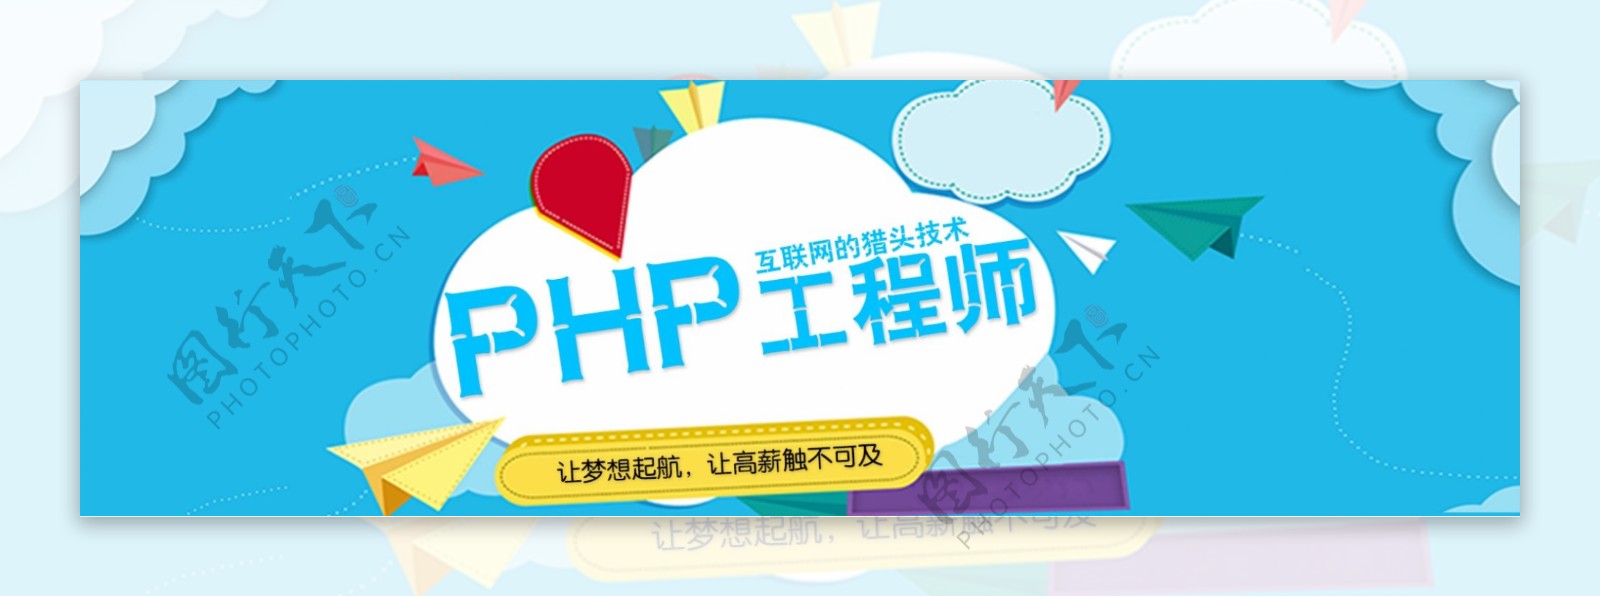 php的网页banner图